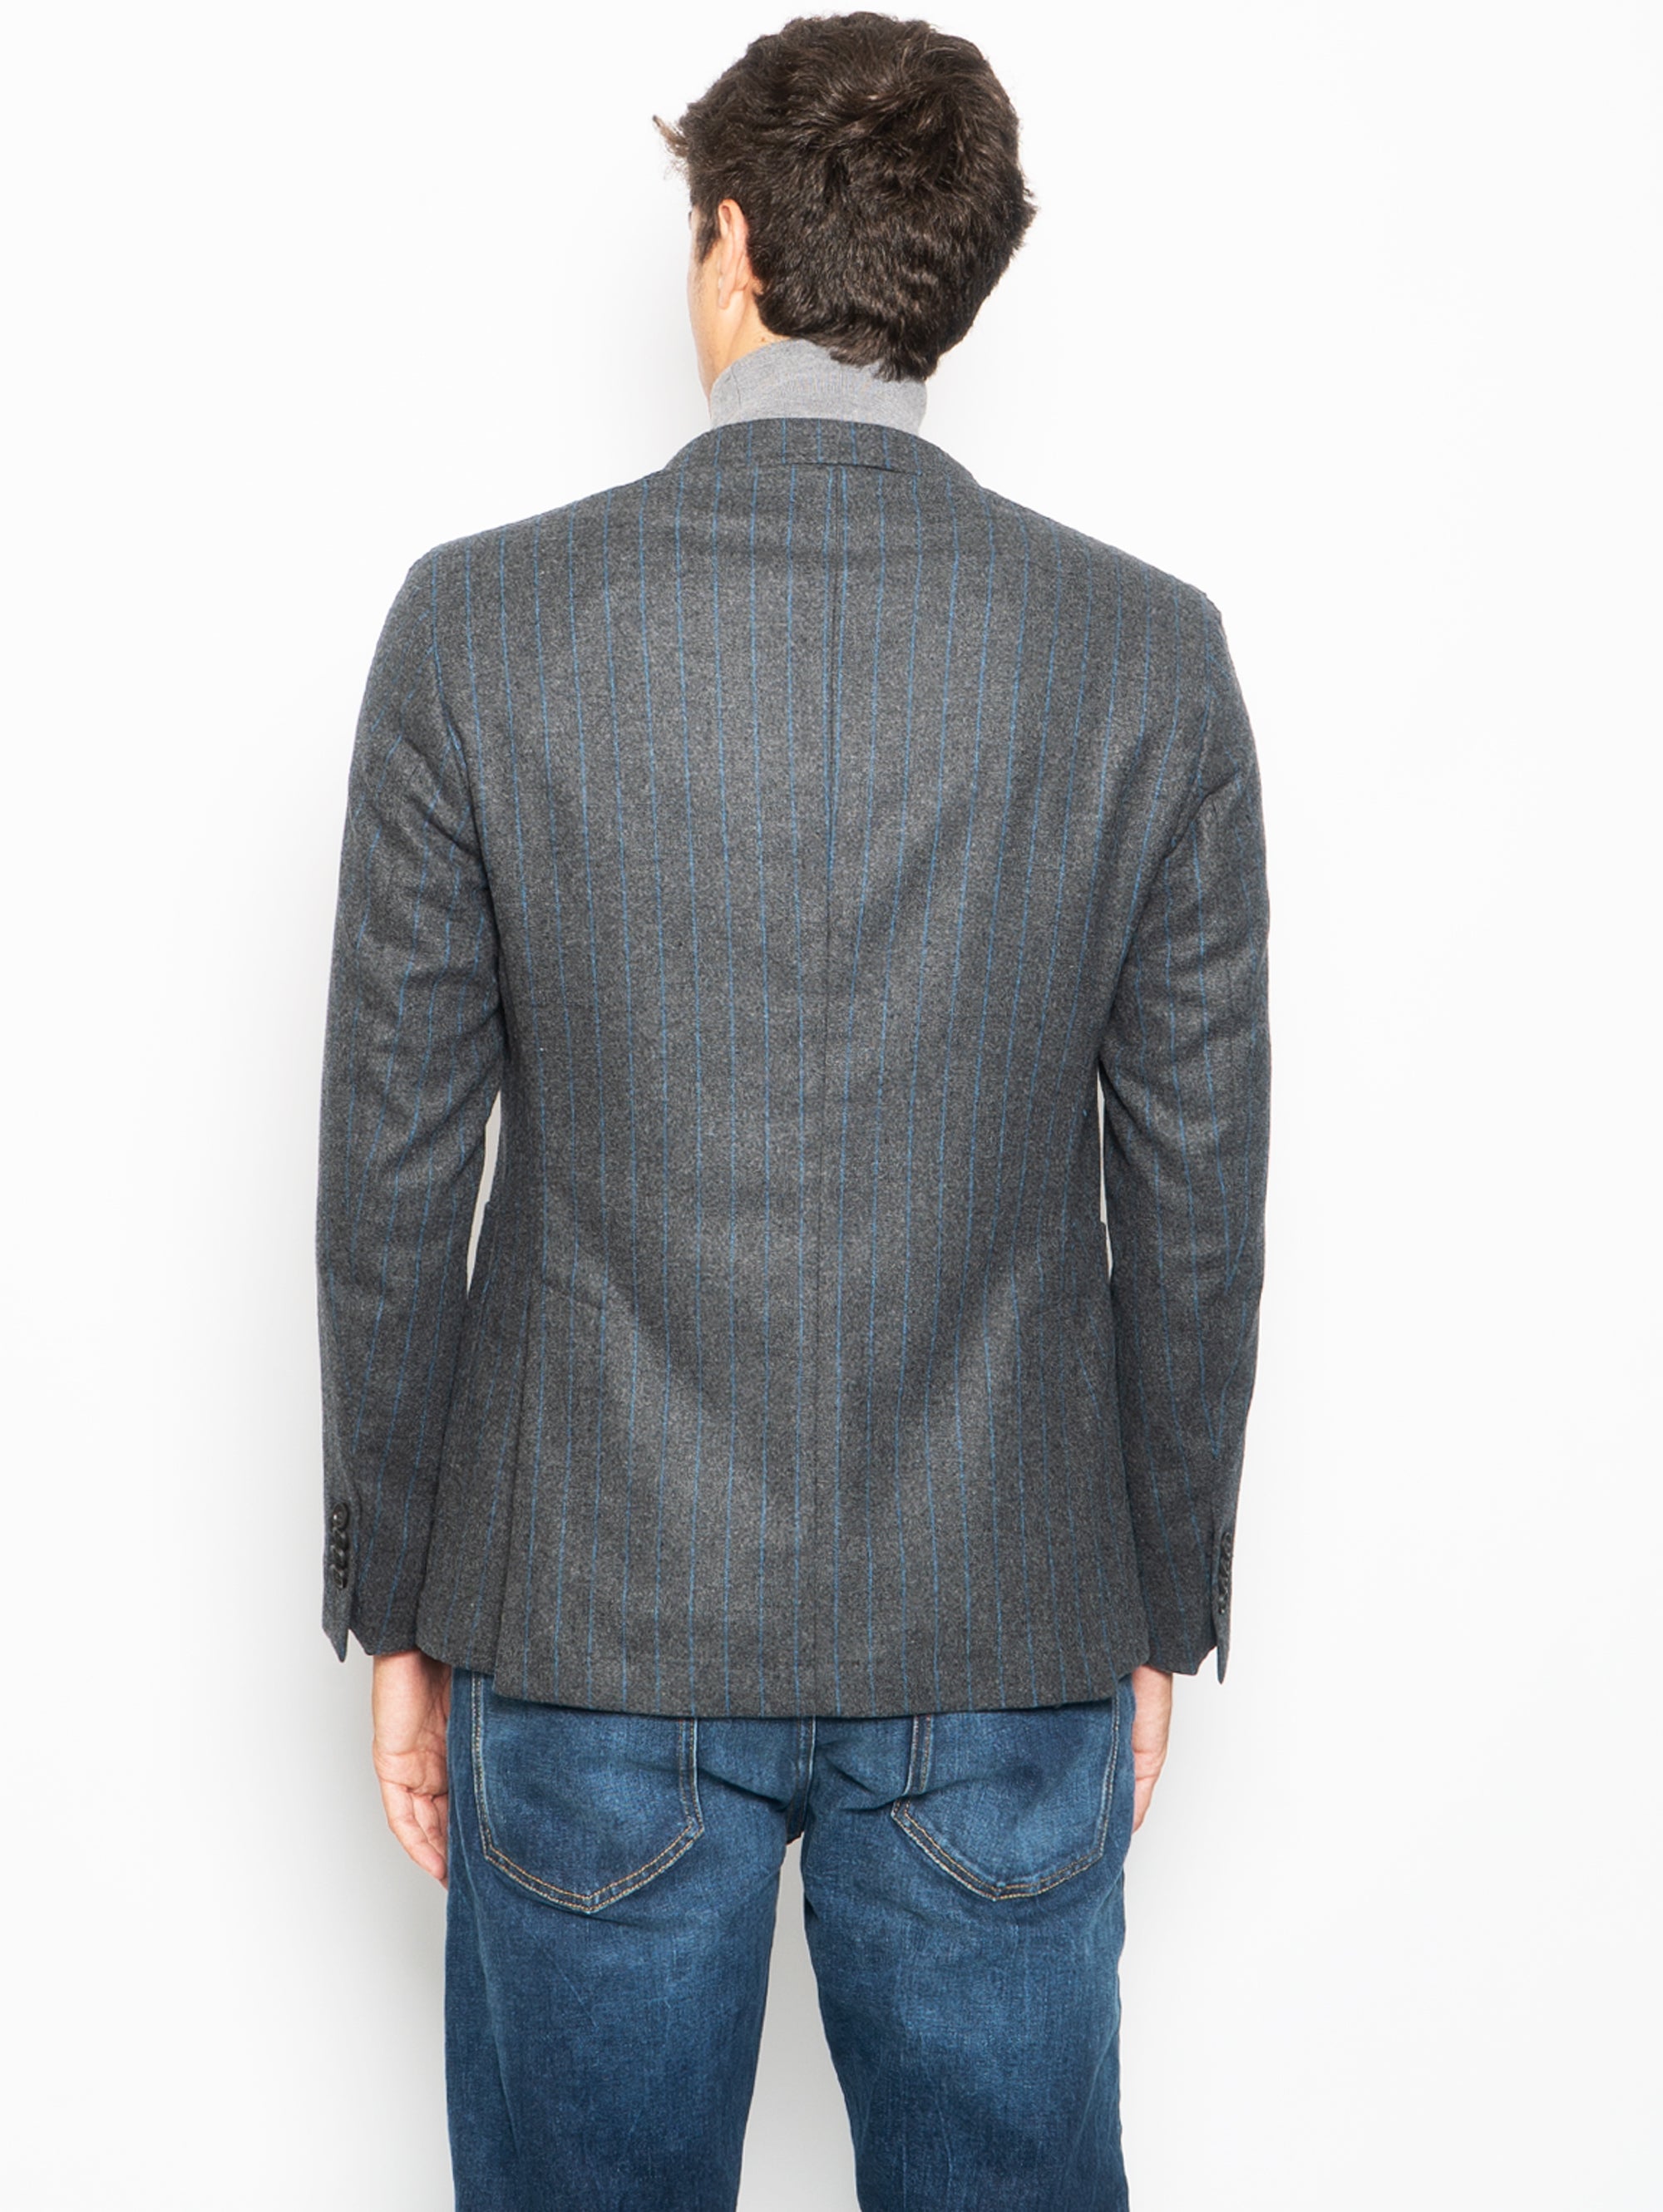 Nuvola Single-Breasted Pinstripe Gray Jacket